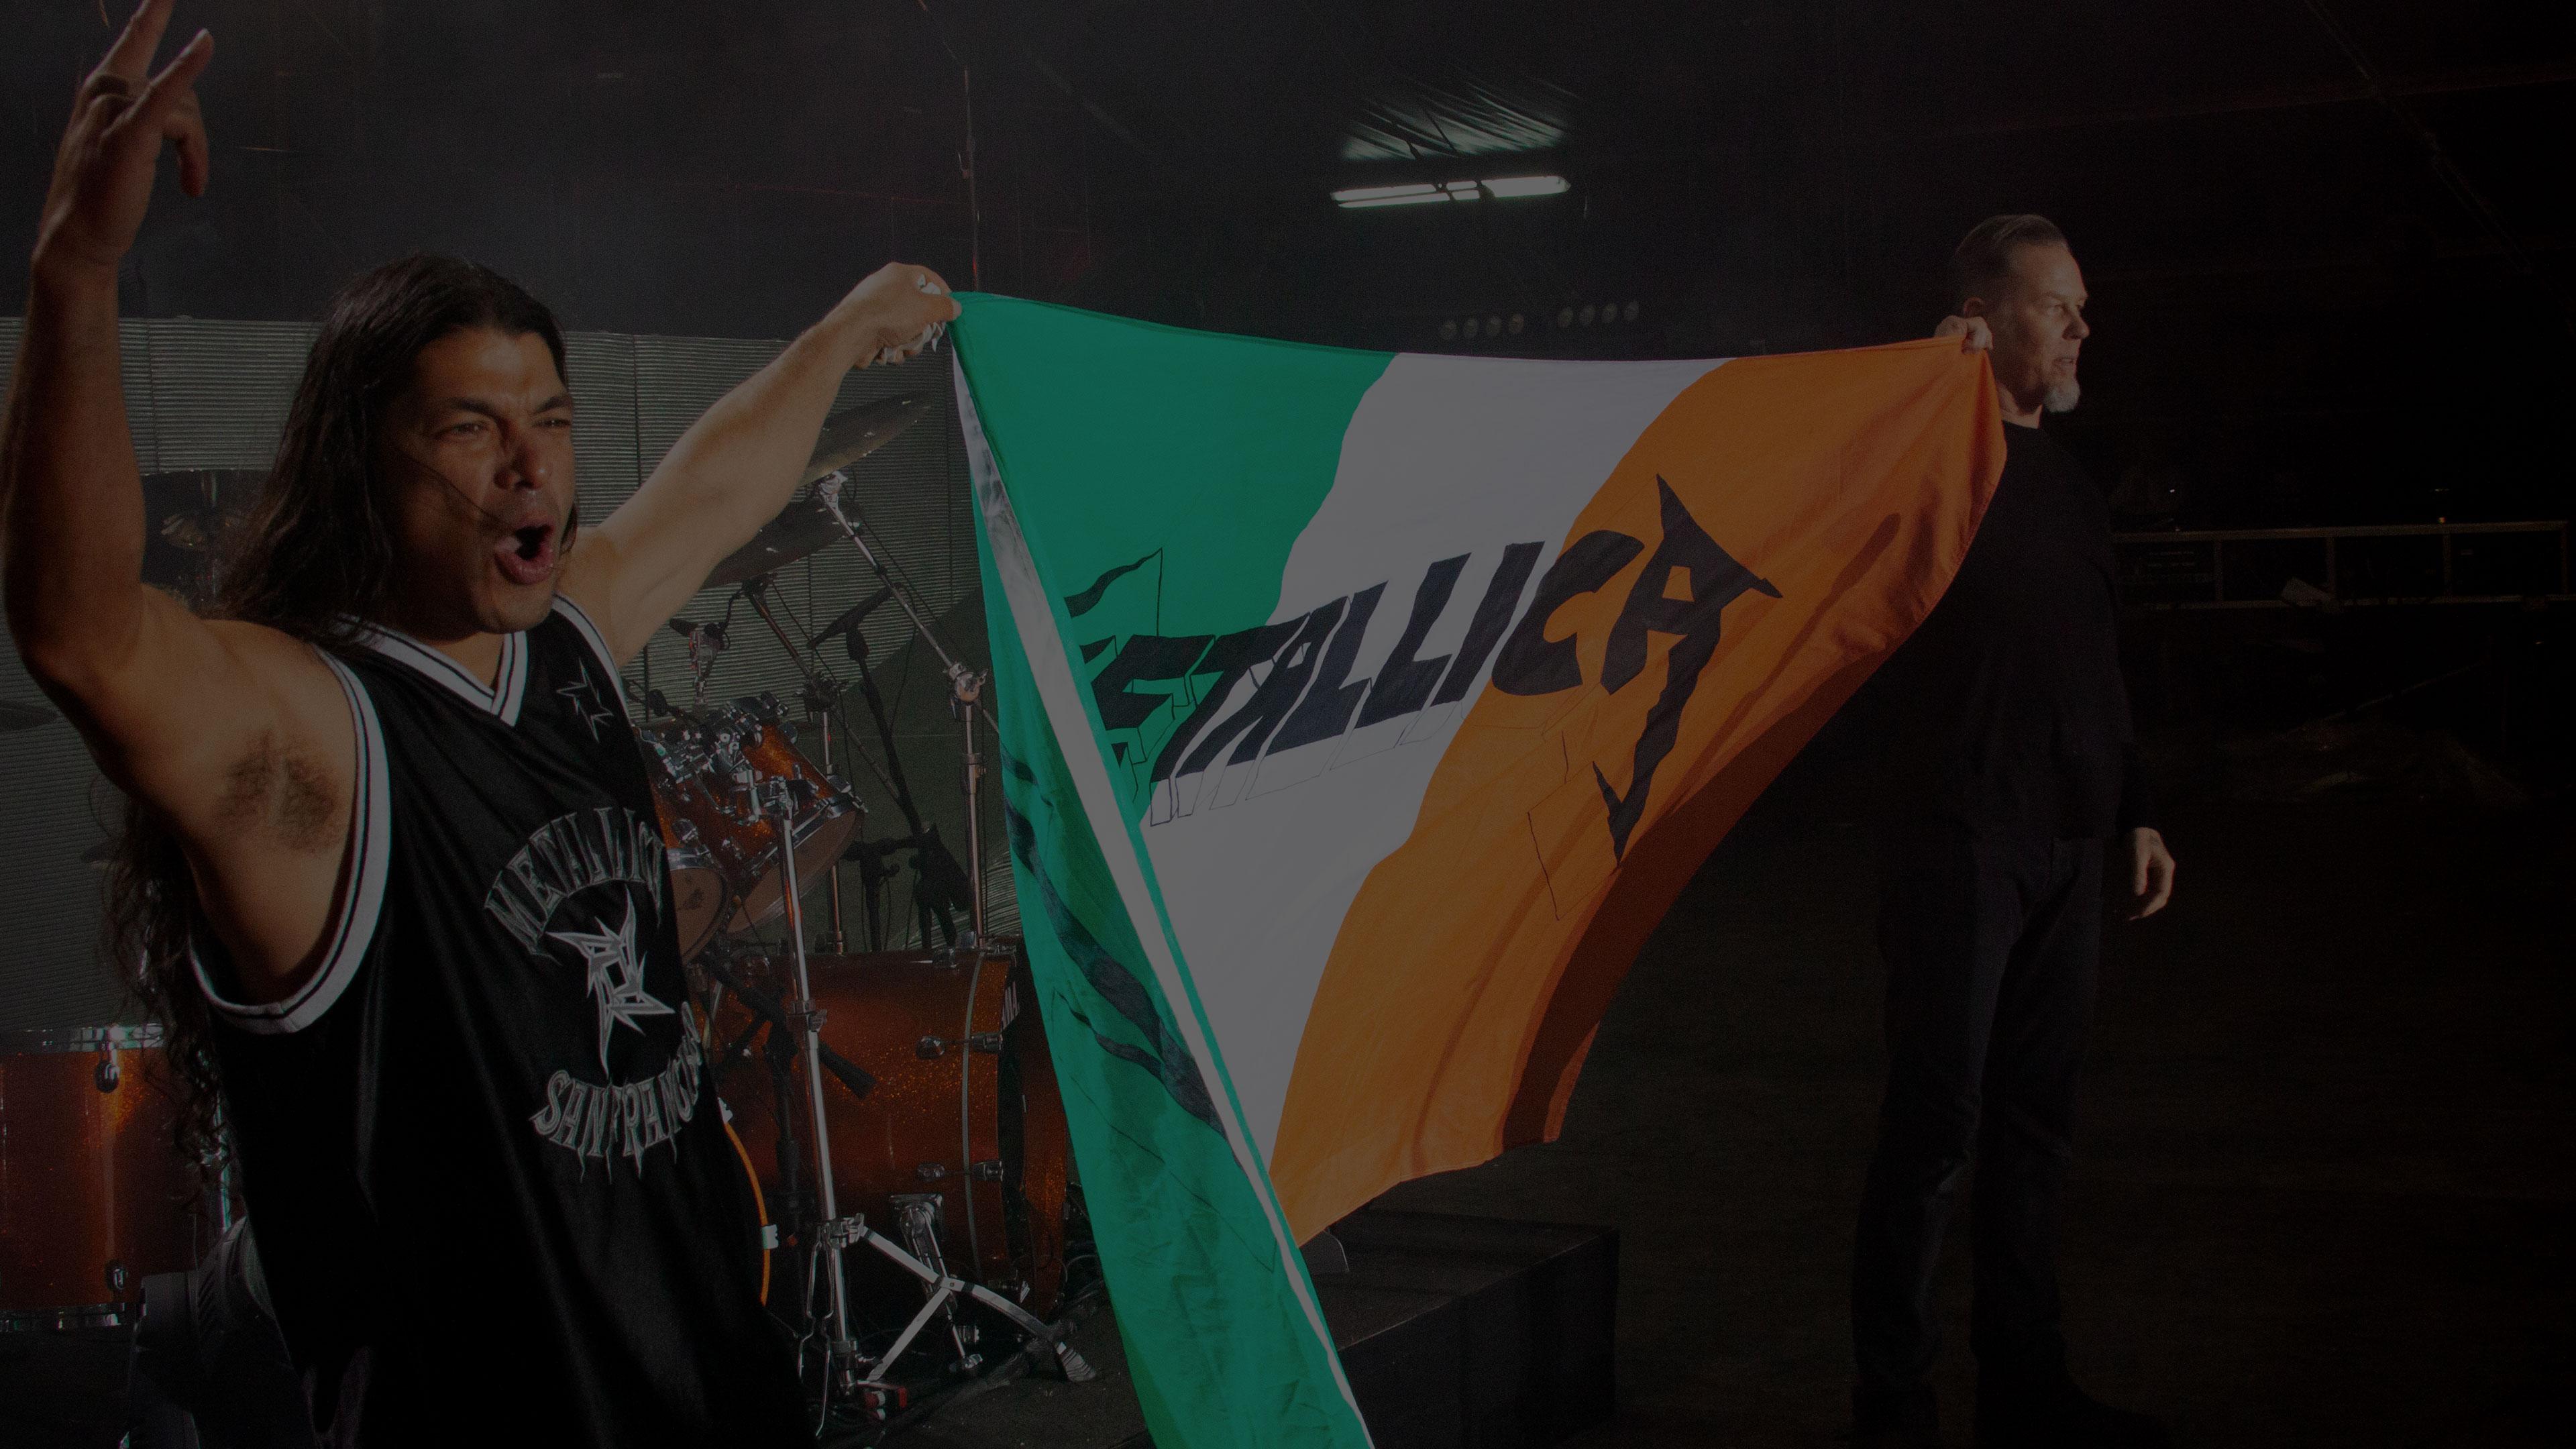 Metallica at Marlay Park in Dublin, Ireland on August 1, 2009